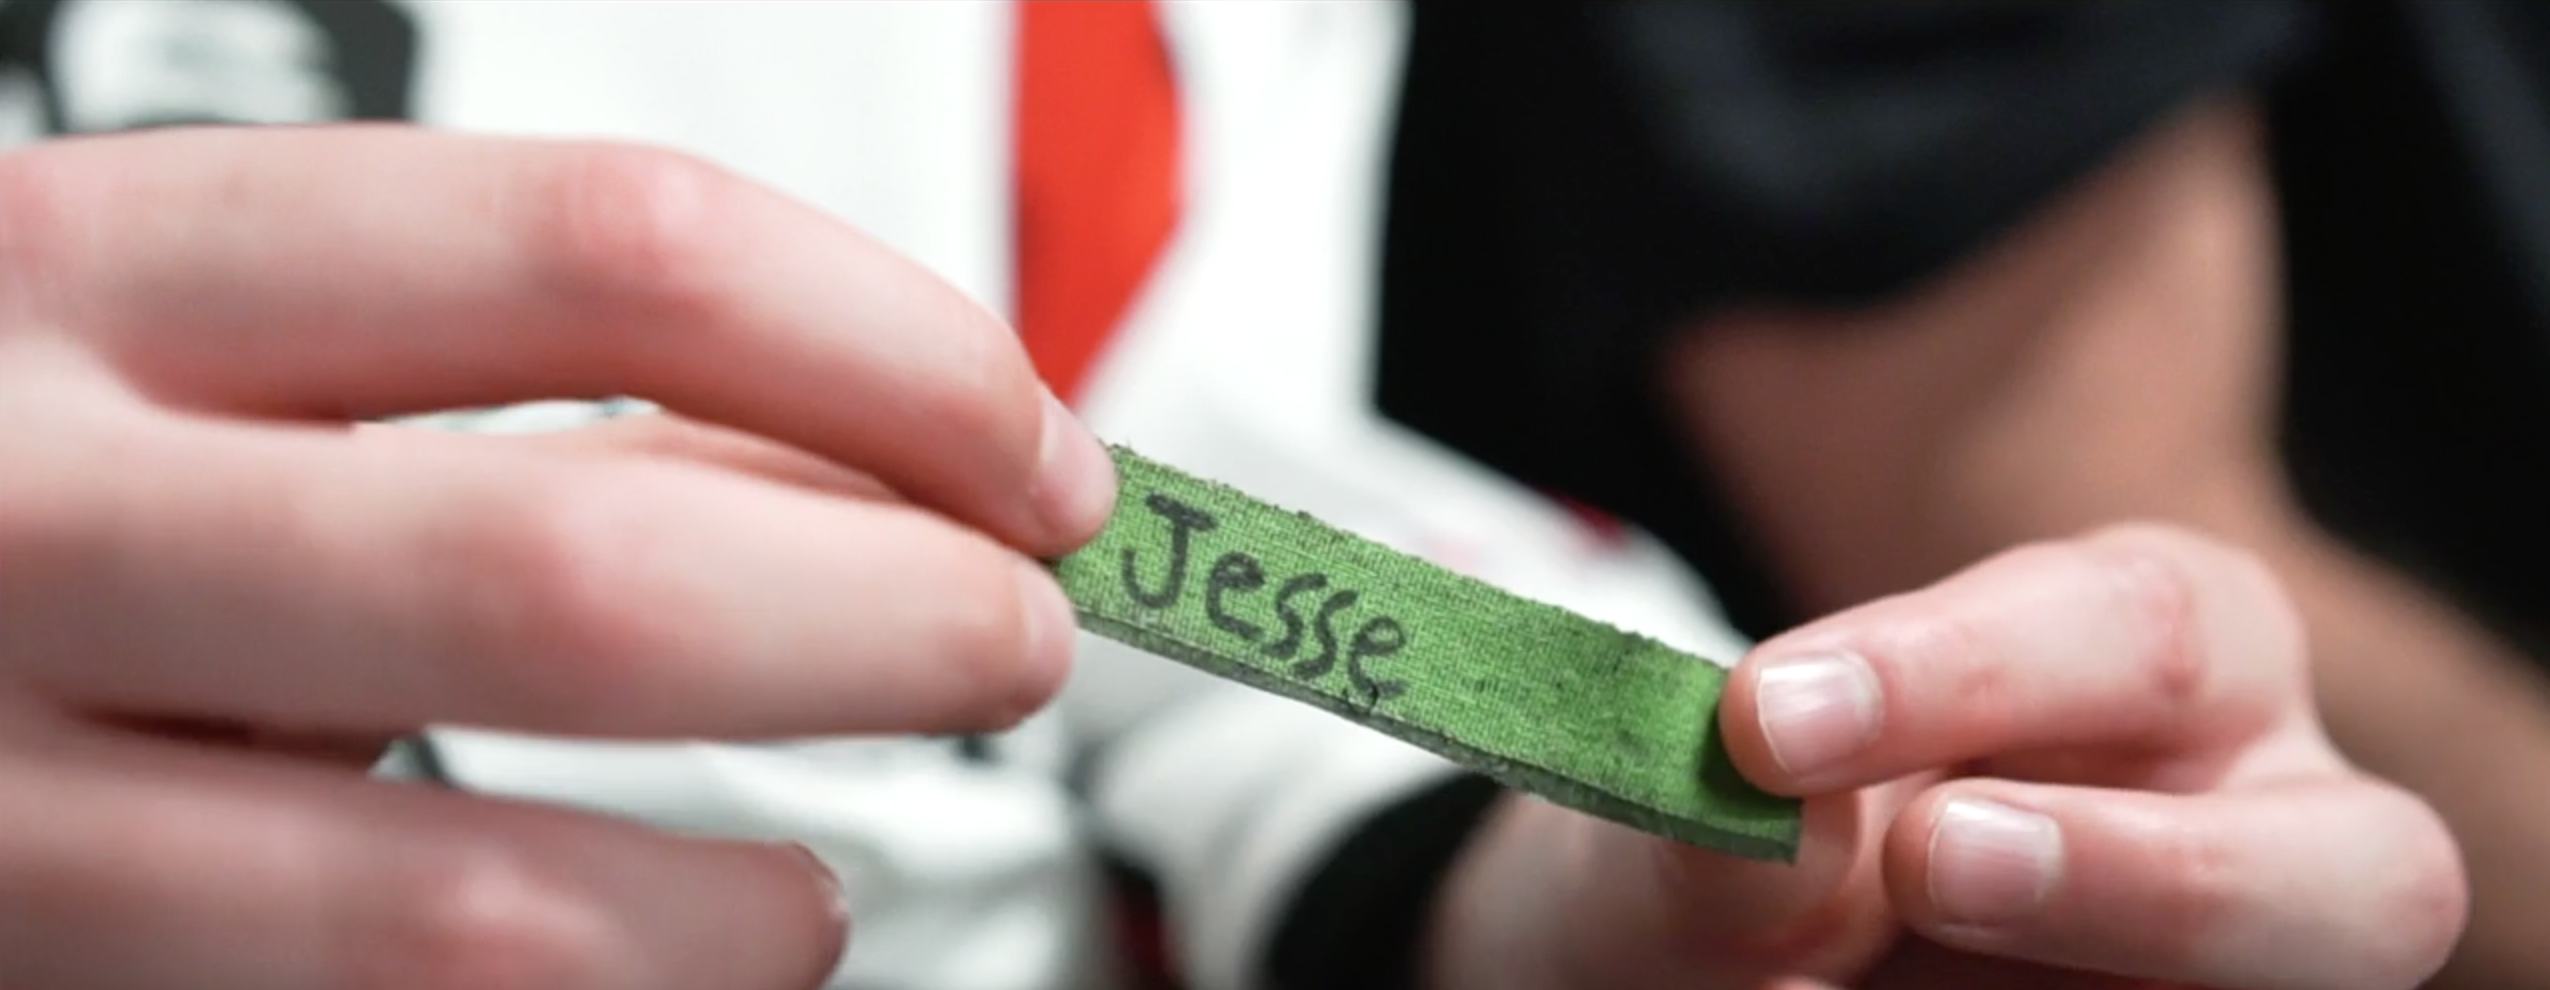 Jesse Anders Short-Gershman hockey stick tape